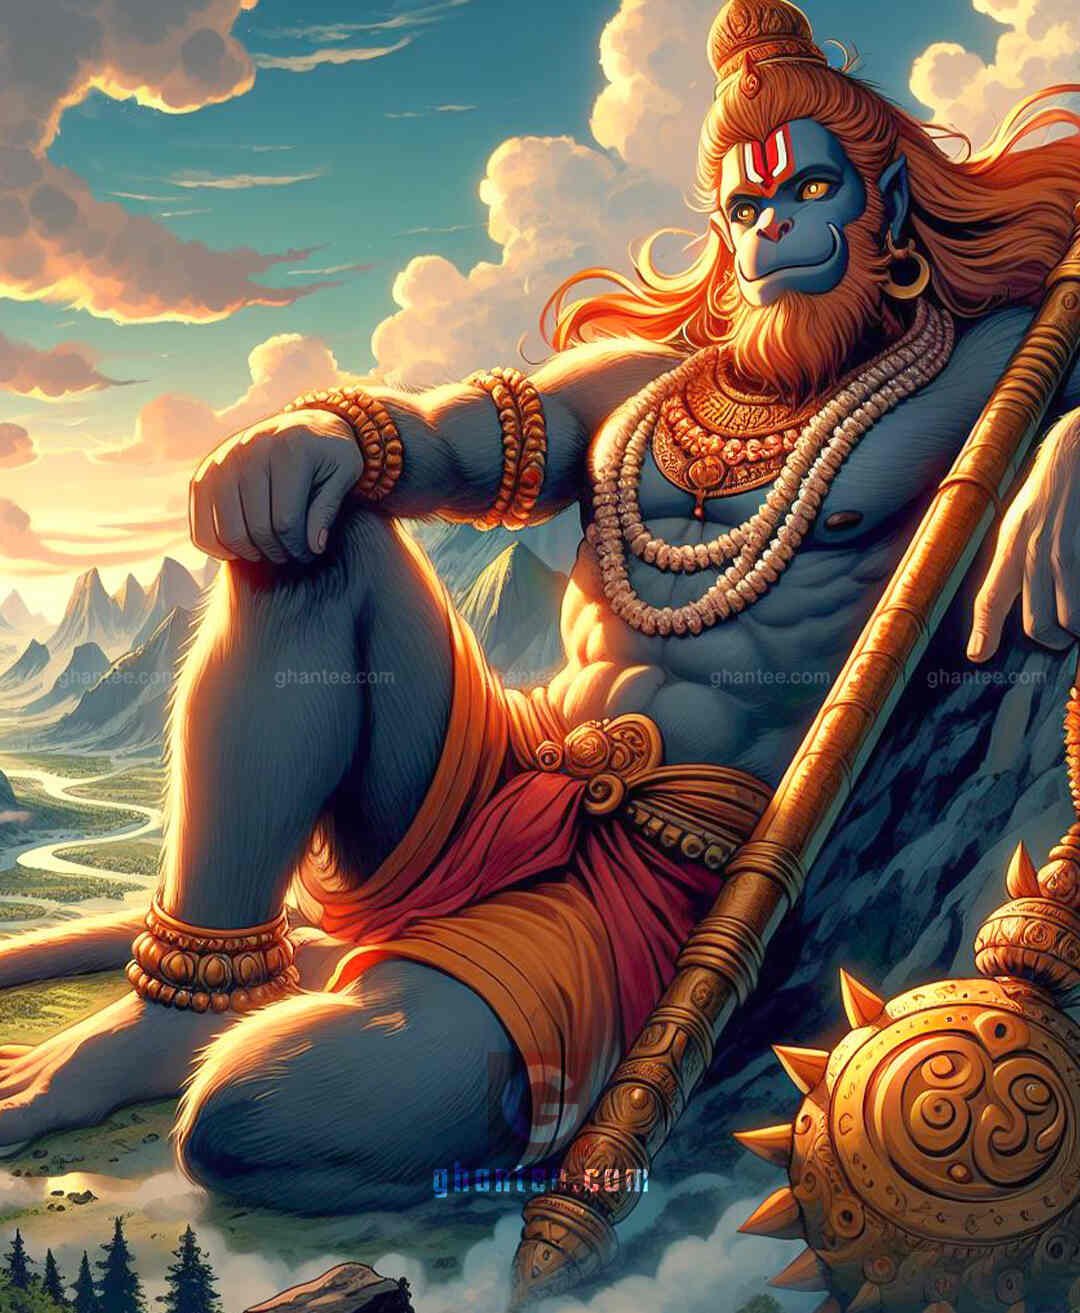 lord hanuman epic night image 1080p